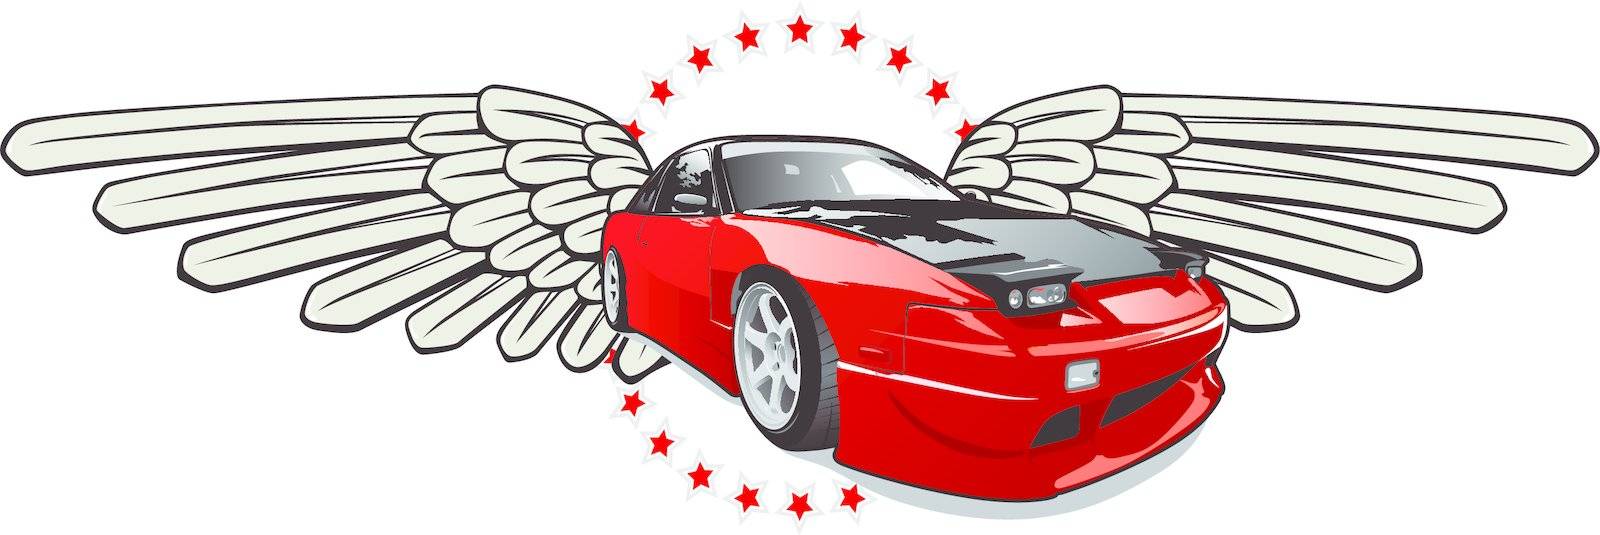 race car emblem by lusik_kolbaskin